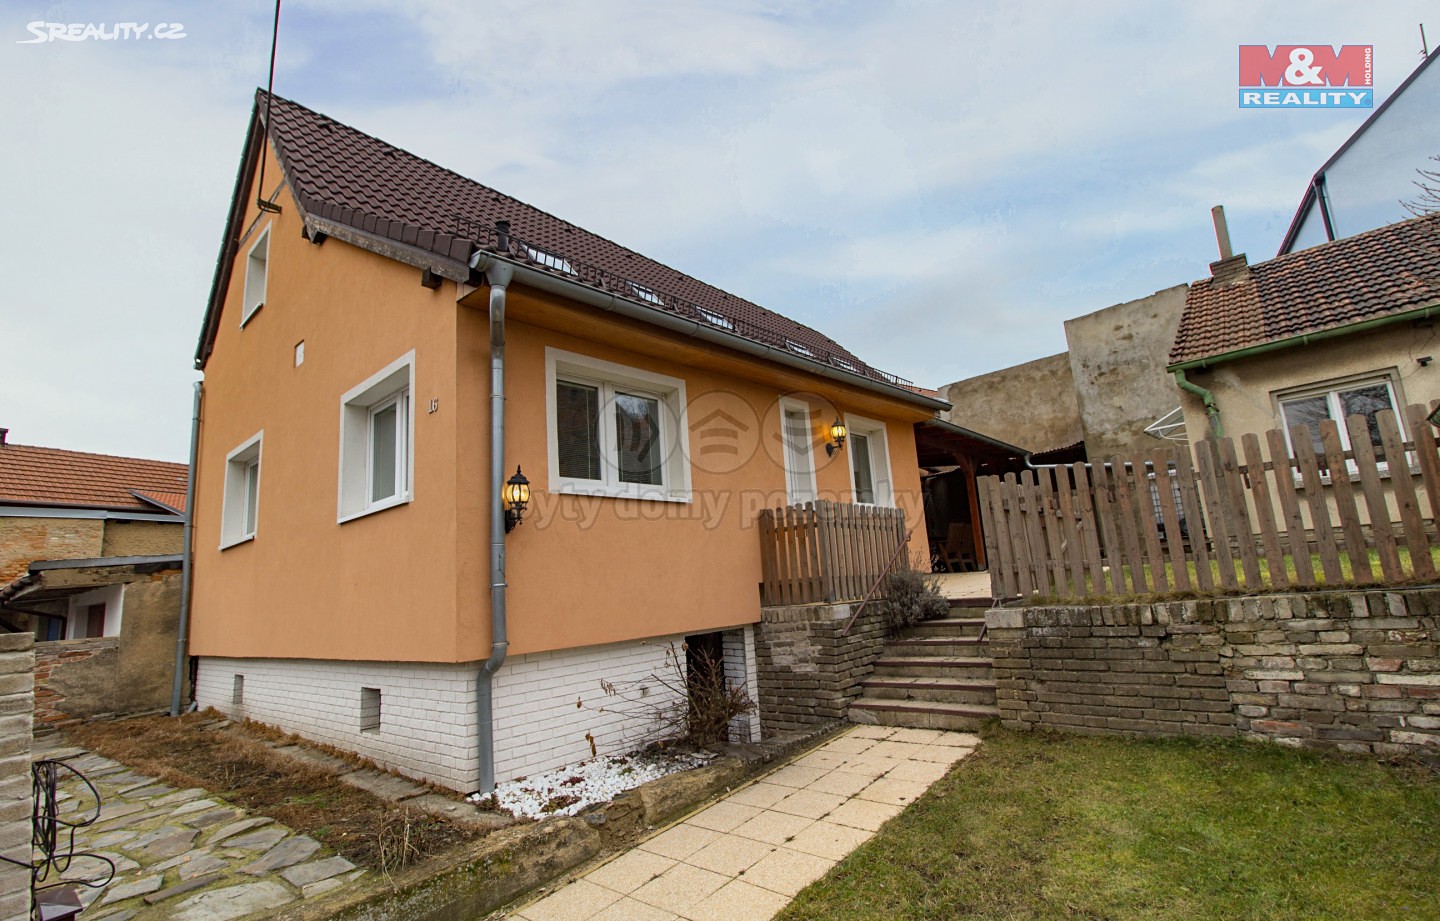 Prodej  rodinného domu 156 m², pozemek 290 m², Stehelčeves, okres Kladno